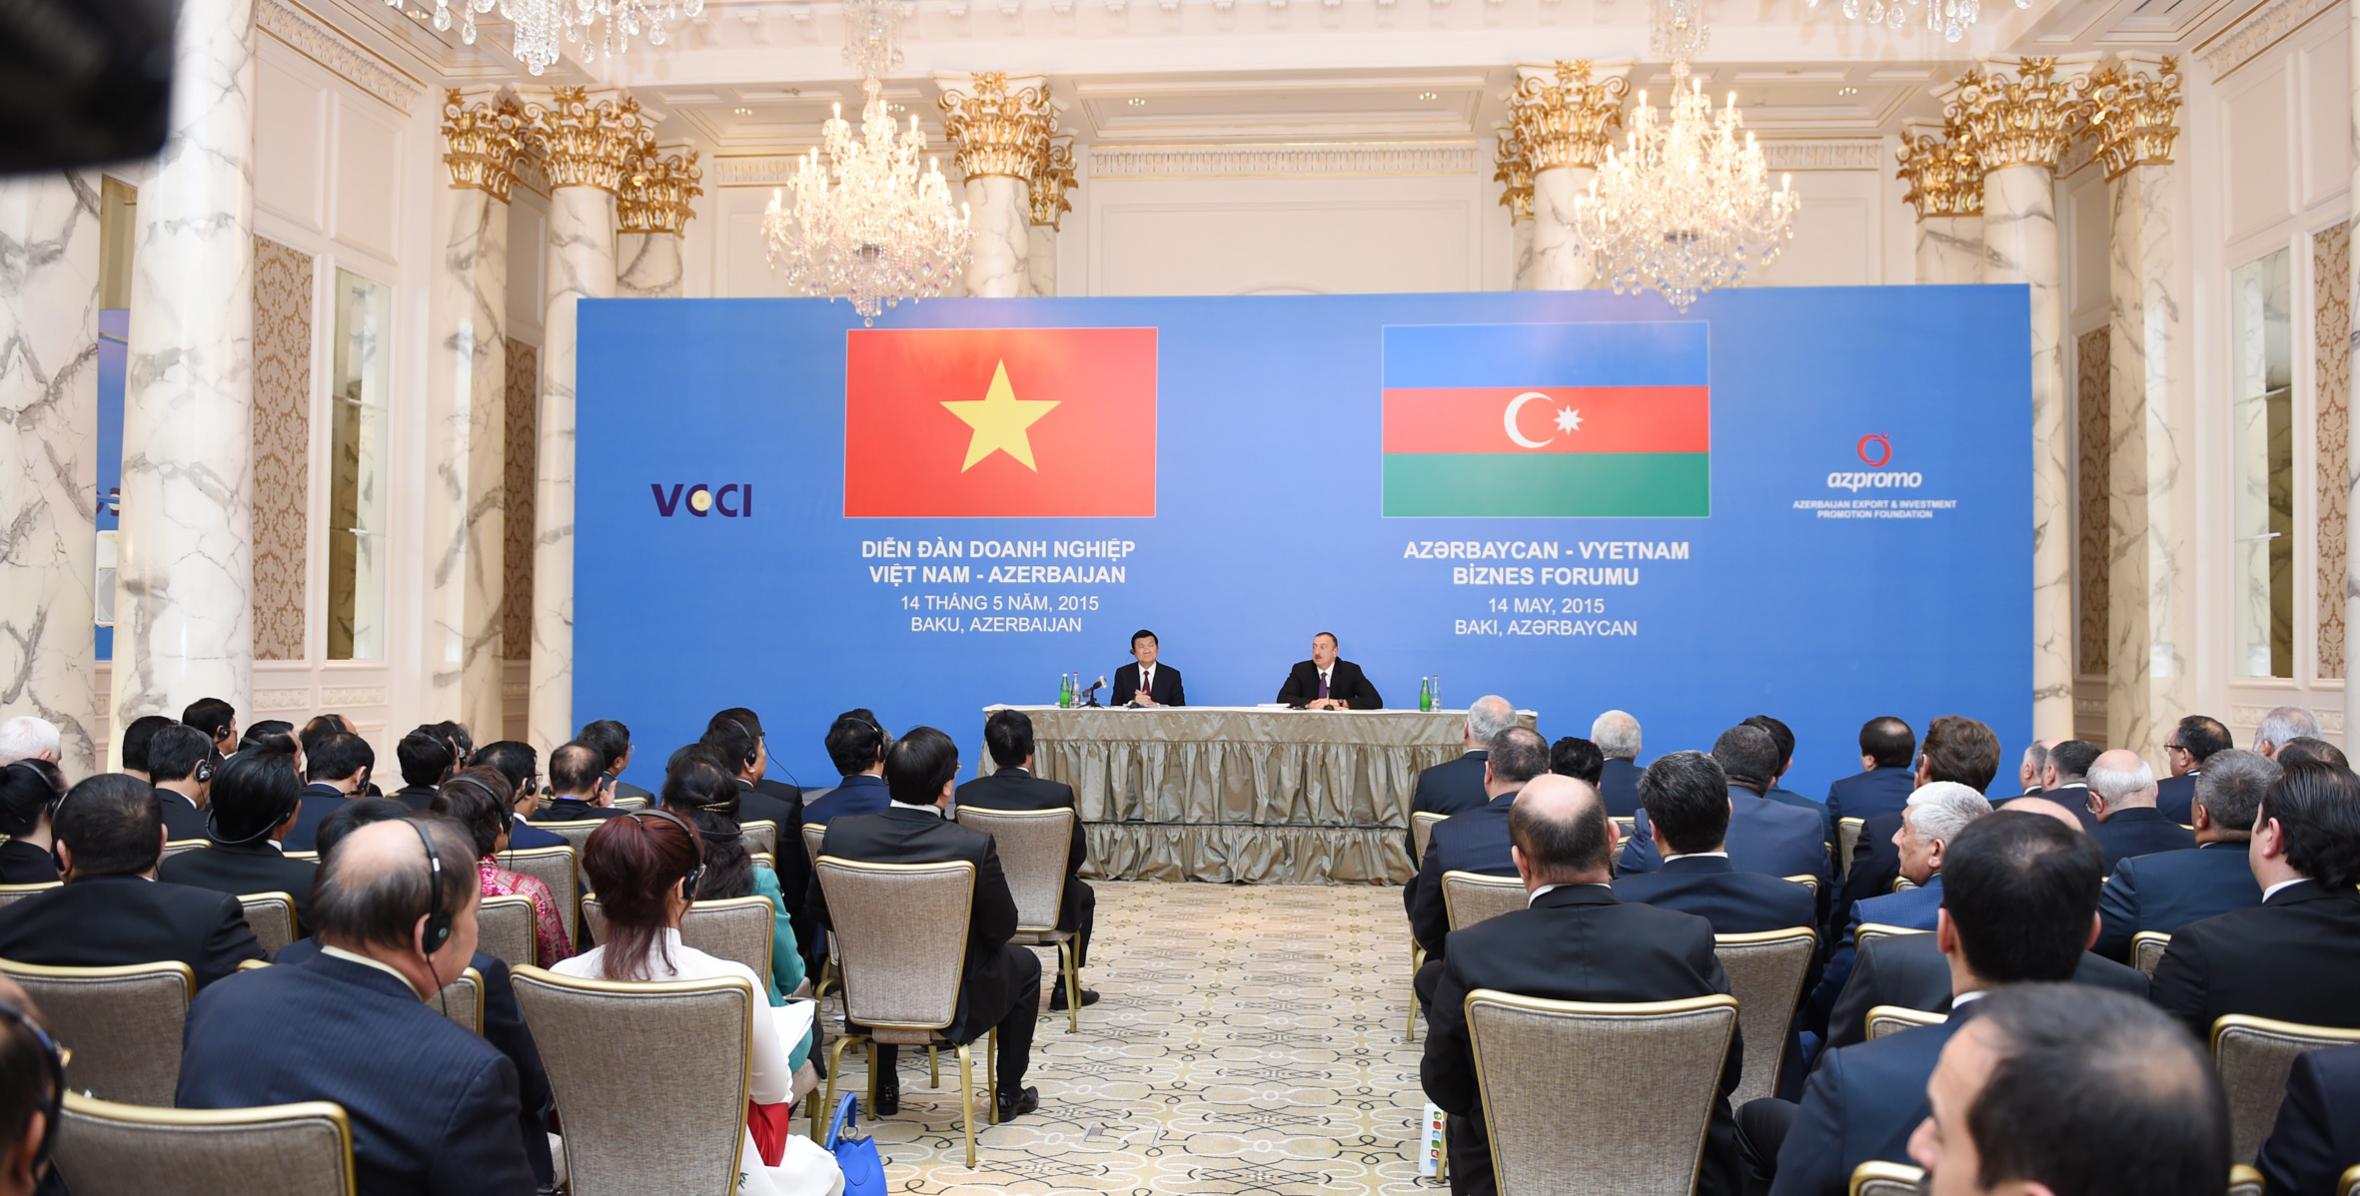 Azerbaijani-Vietnamese business forum was held